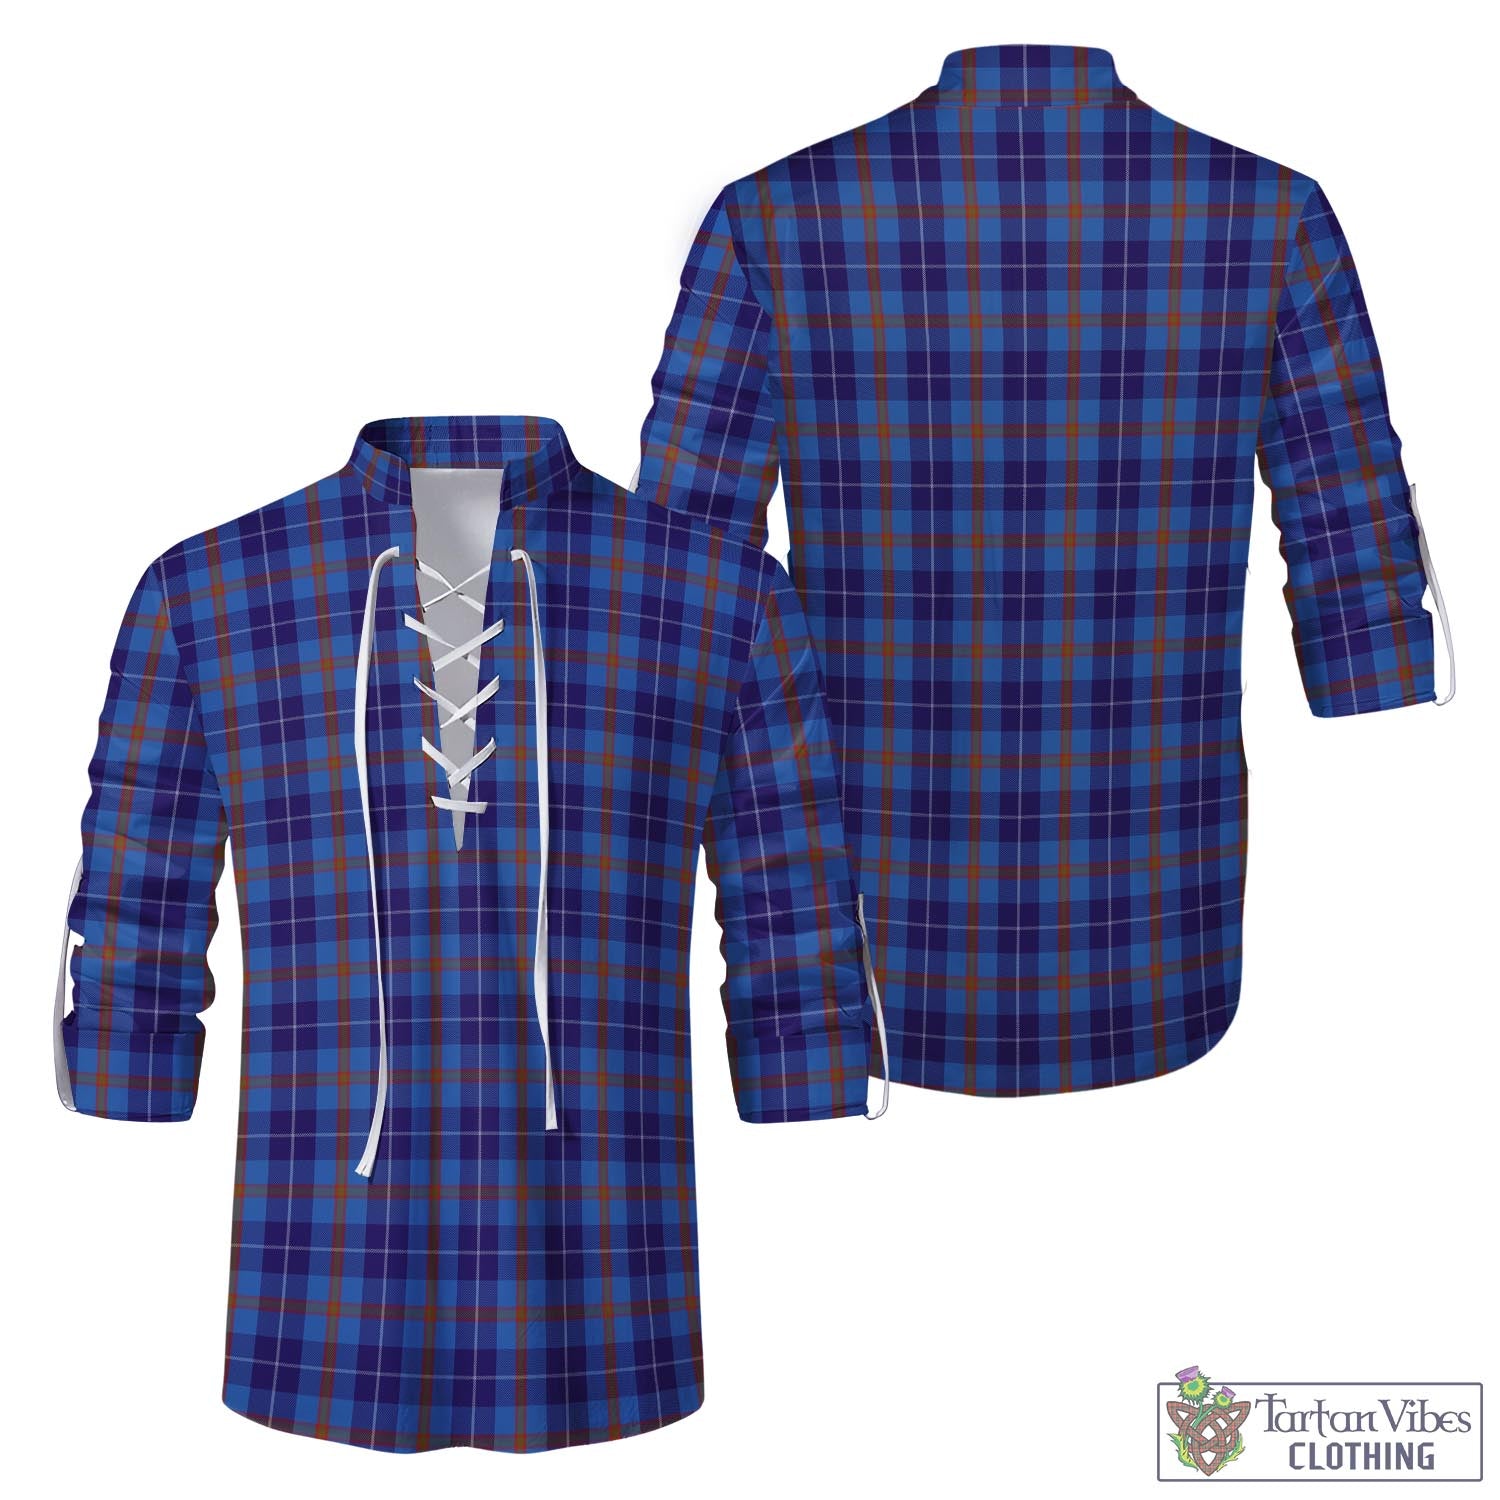 Tartan Vibes Clothing Bryson Tartan Men's Scottish Traditional Jacobite Ghillie Kilt Shirt